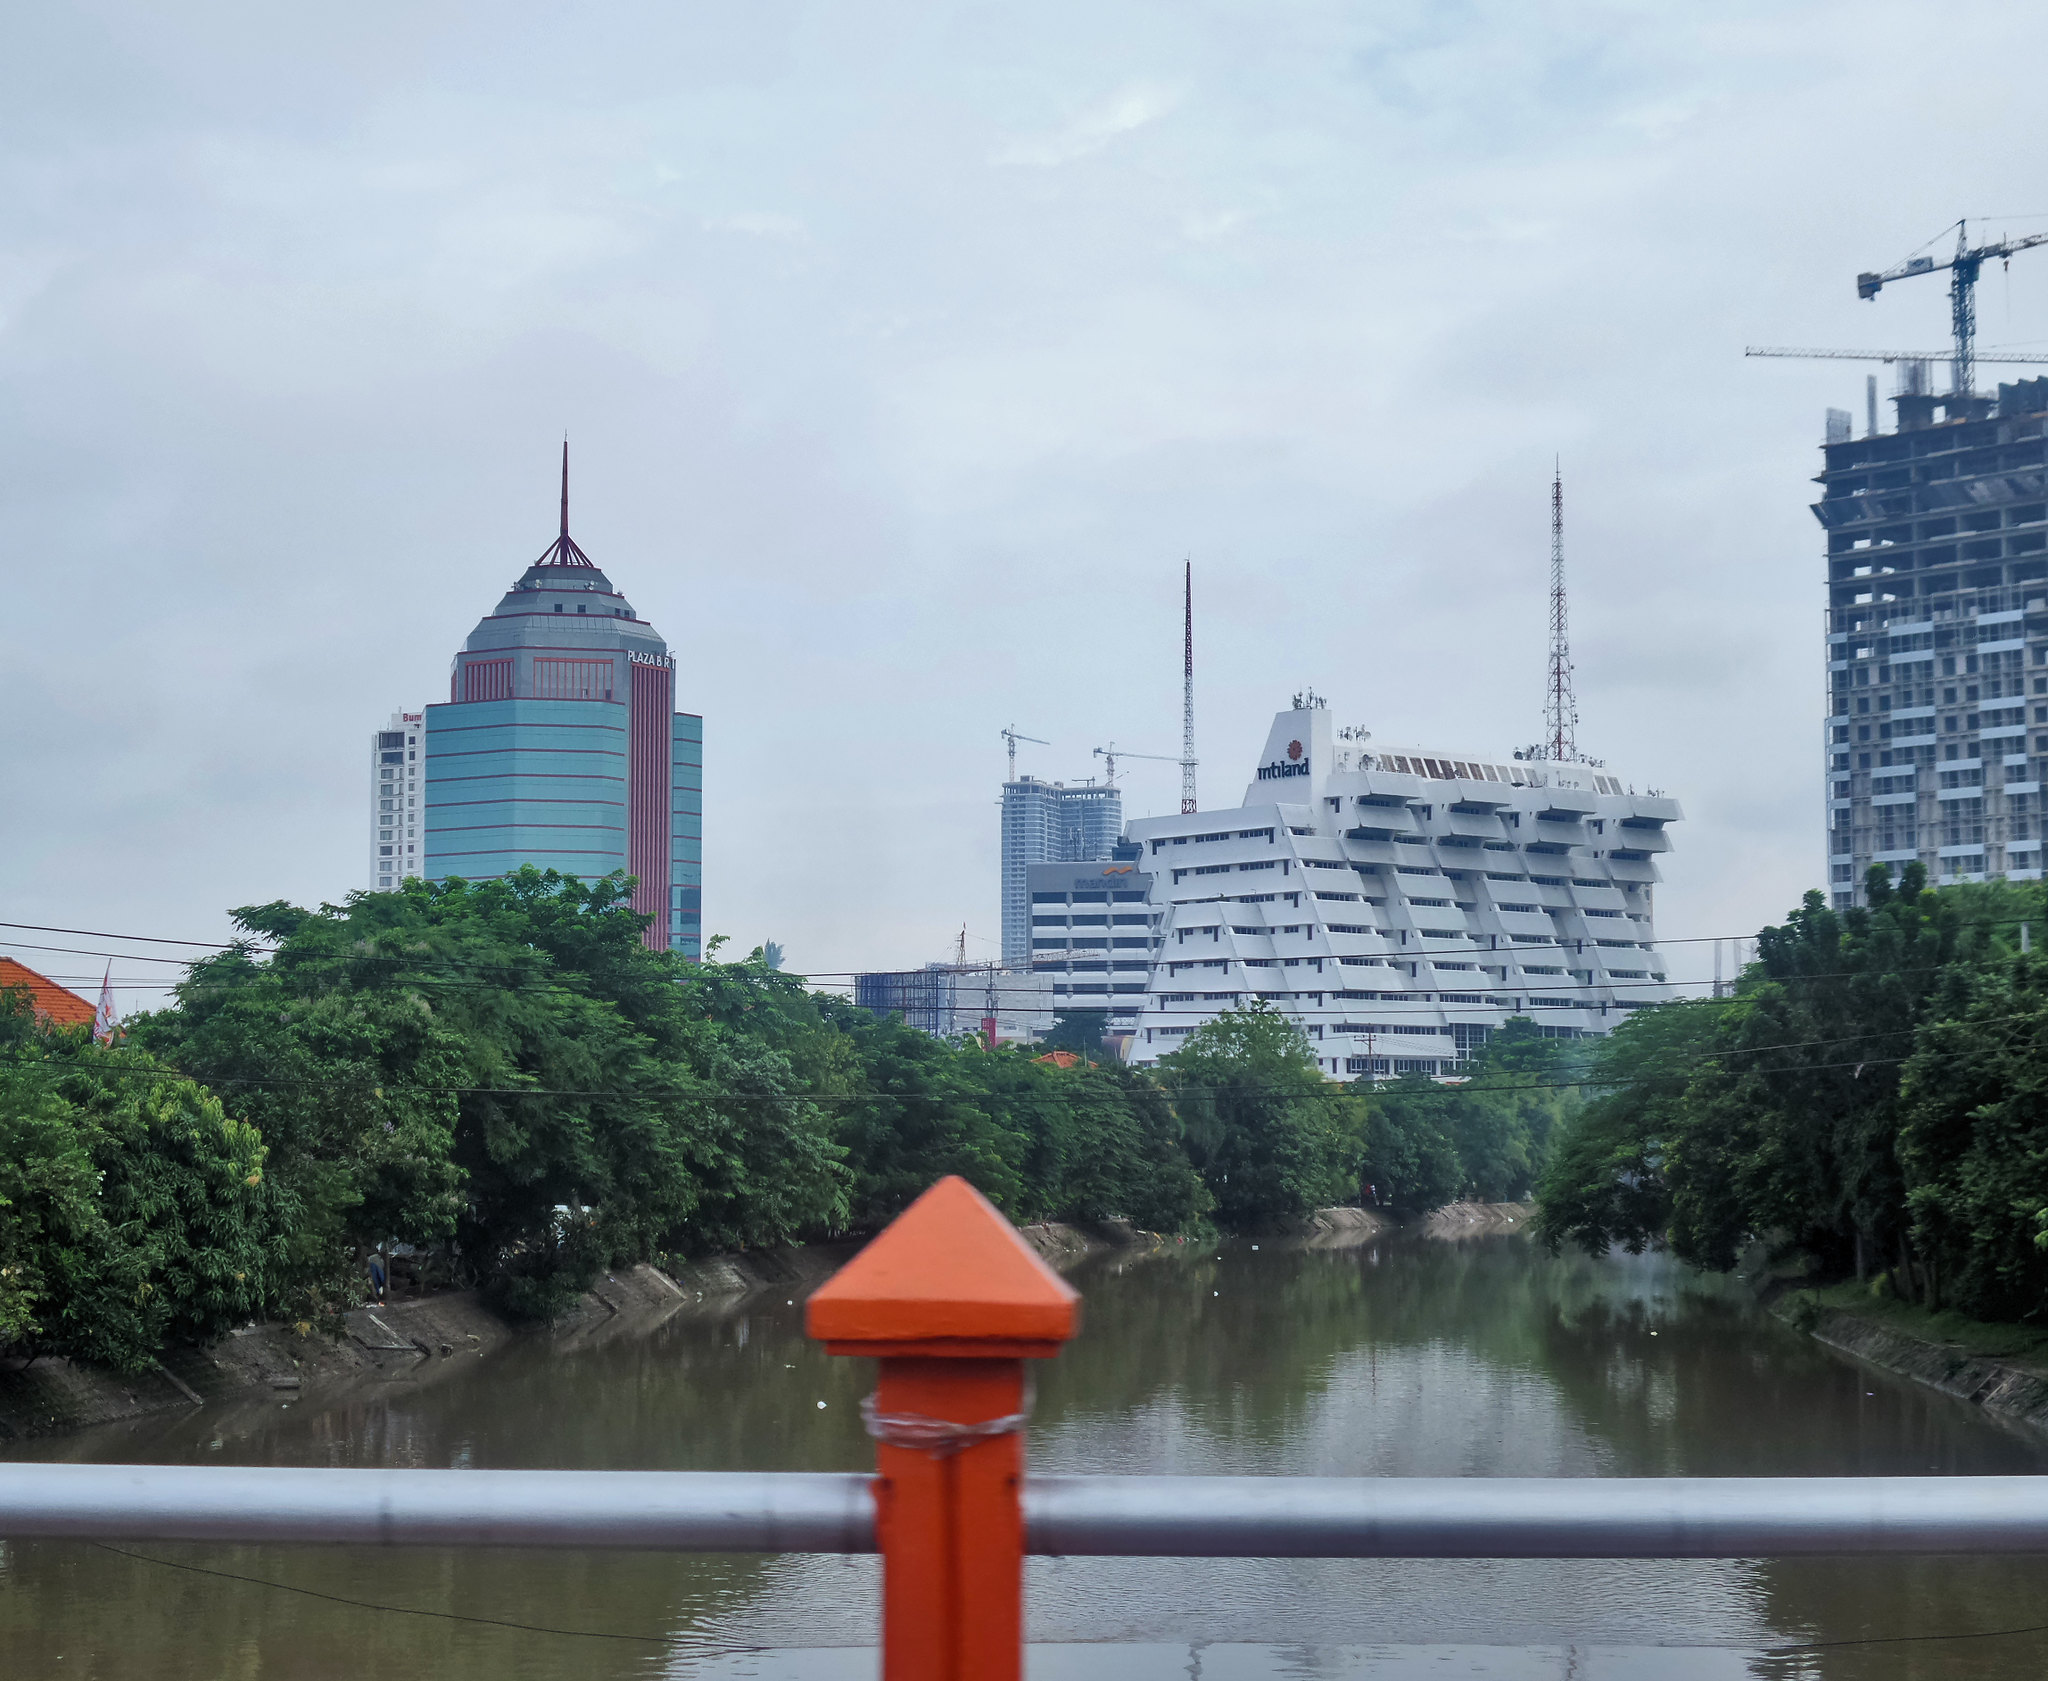 Pusat belanja dan rukan di Surabaya – sebuah sejarah kronologis